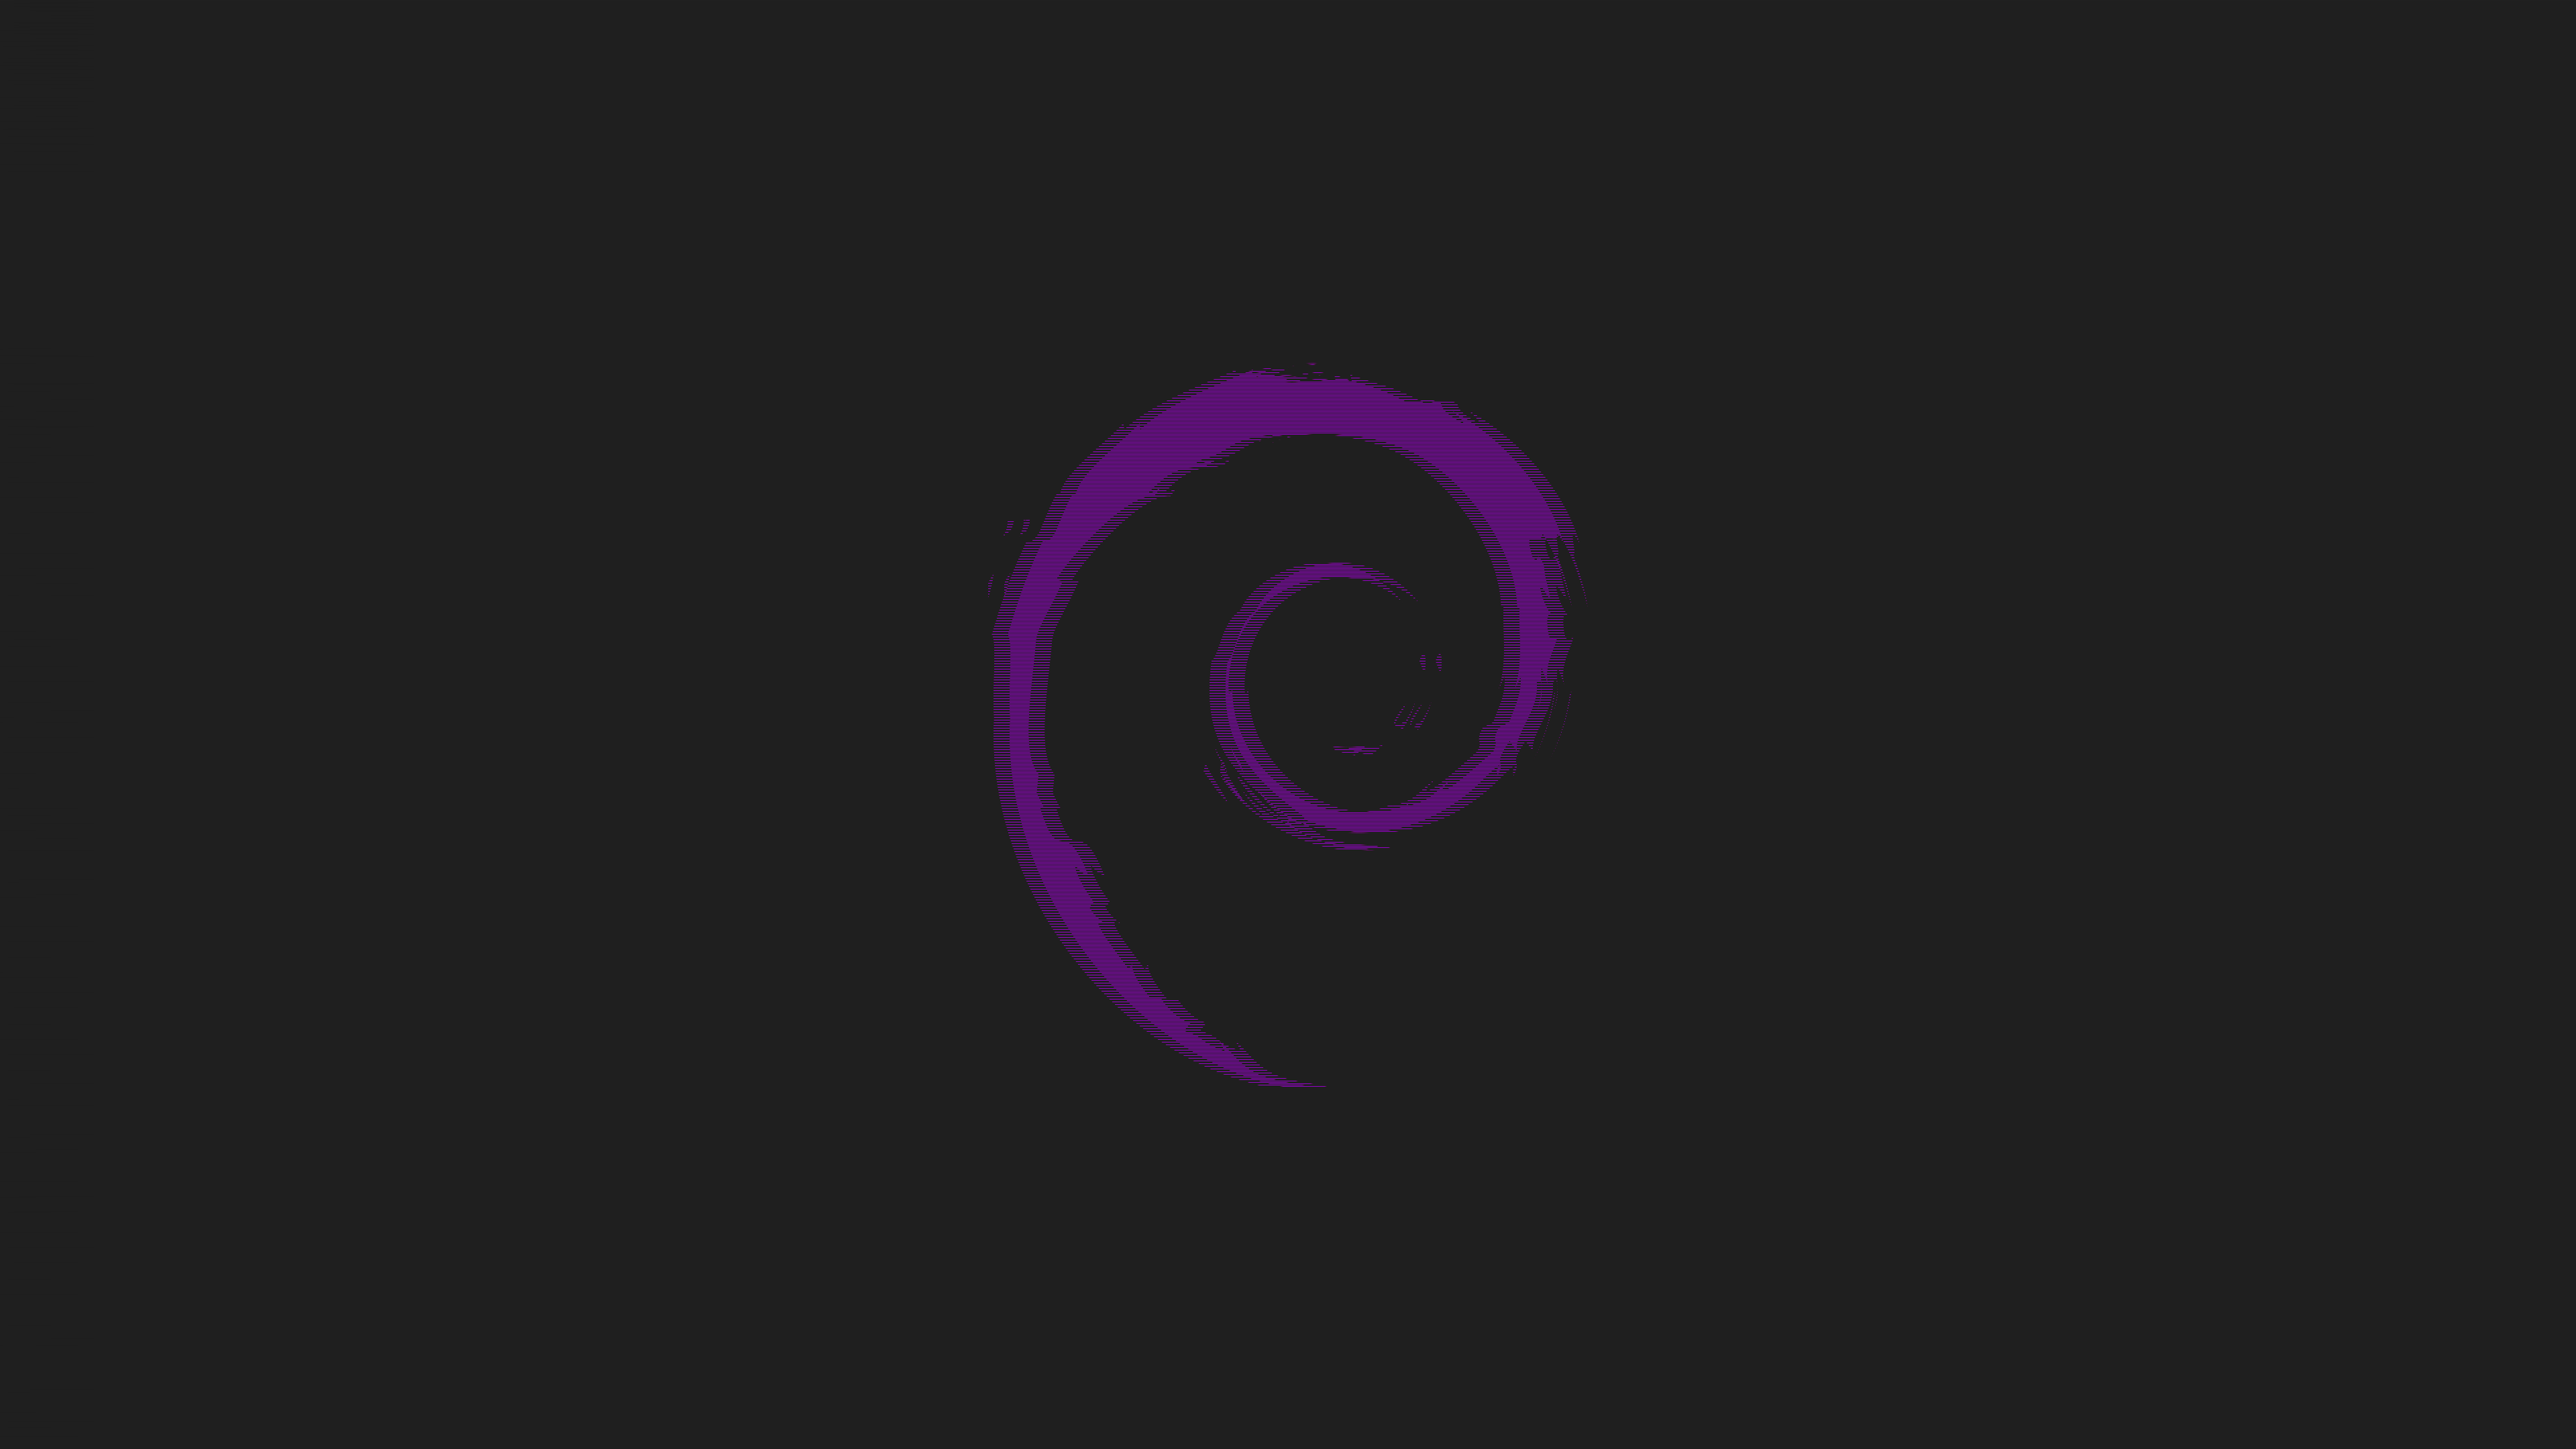 Debian Minimalism Simple Background Purple Black Background Digital Art 3840x2160